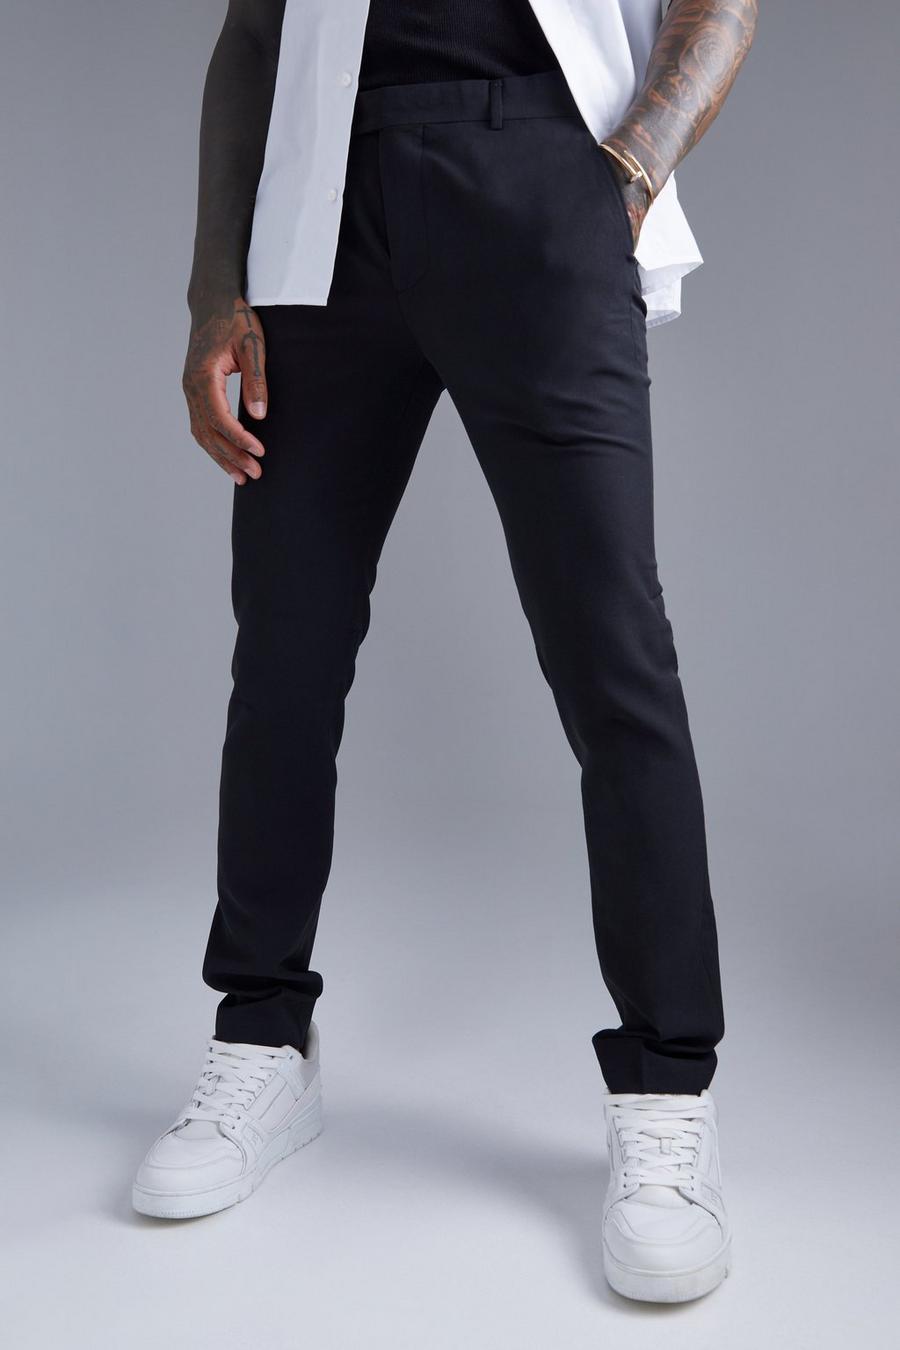 Pantaloni Smart in tinta unita Skinny Fit con catena, Black nero